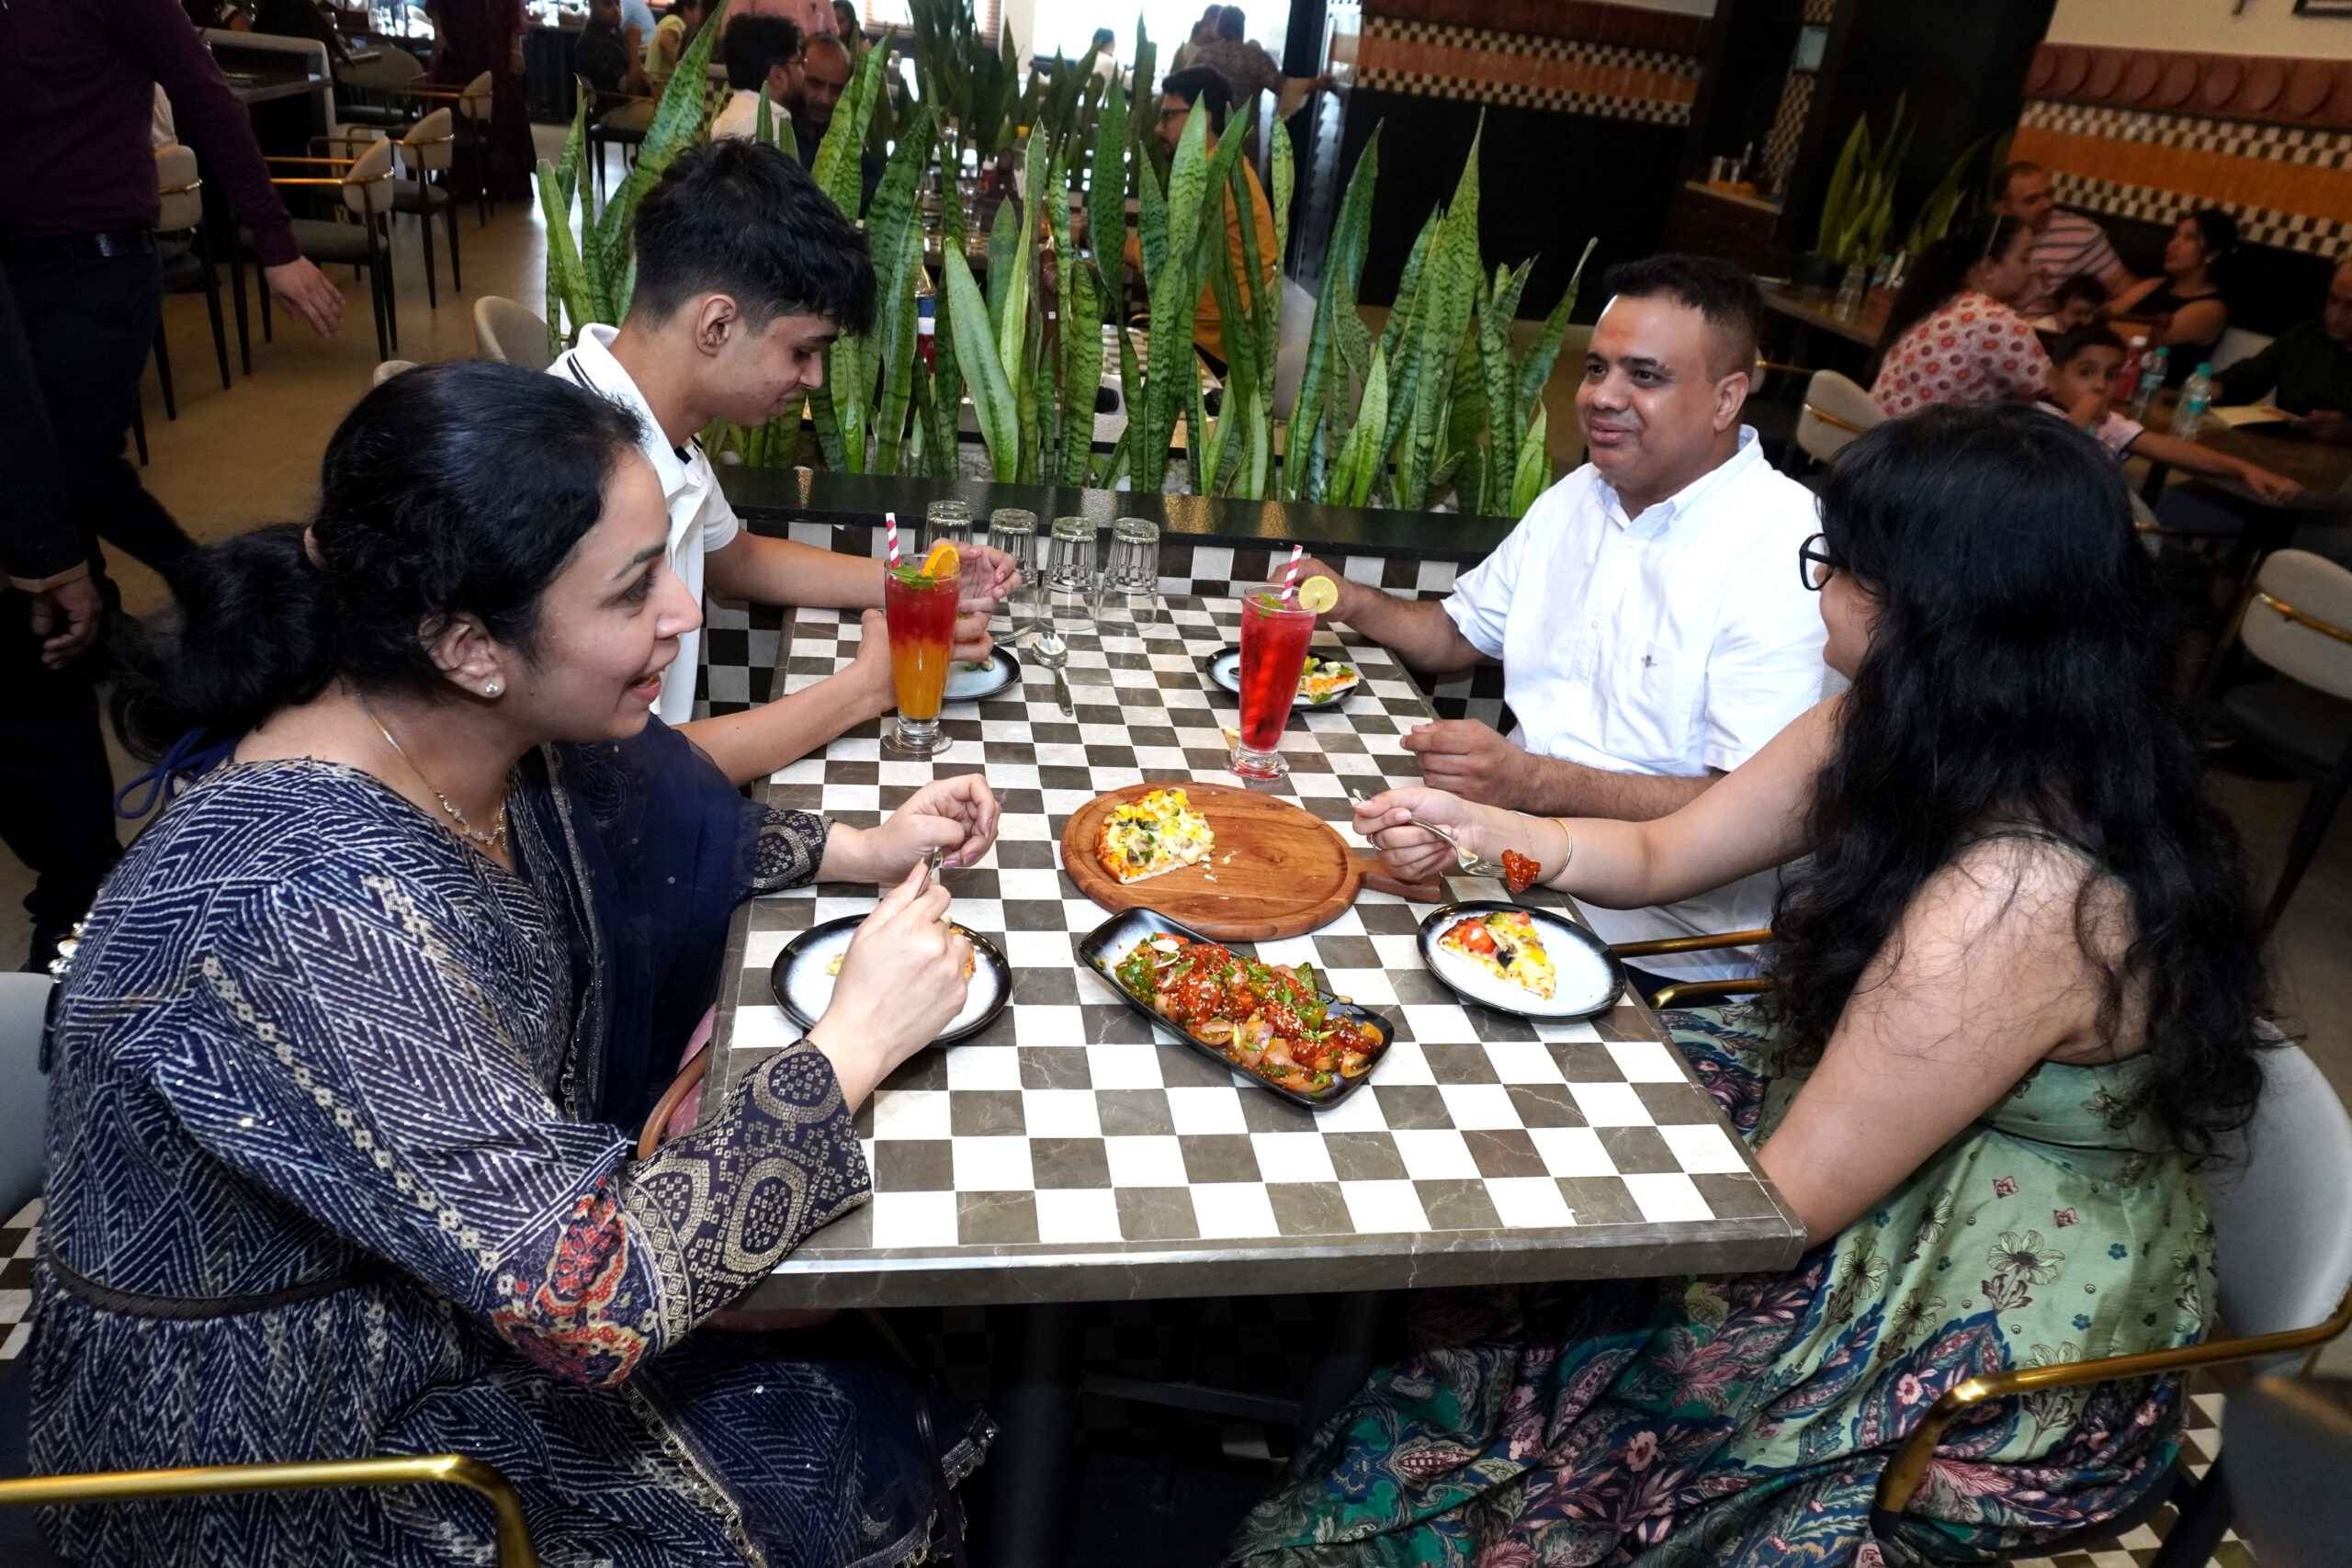 Vishal Chugh, Founder of Vishal's Restaurant & Banquet poses inside the newly opened restaurant